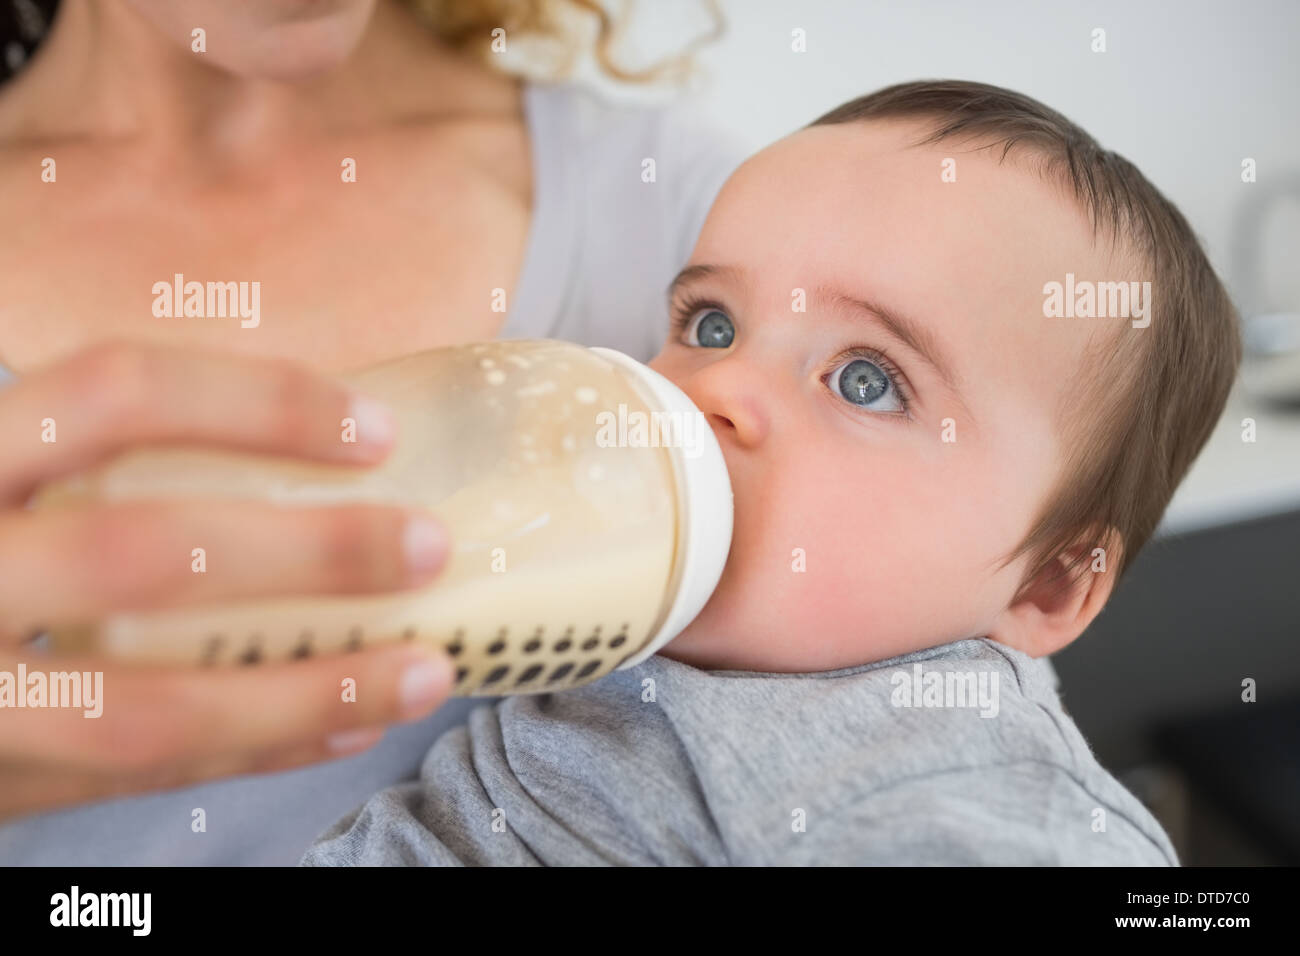 Mother feeding milk to baby Stock Photo